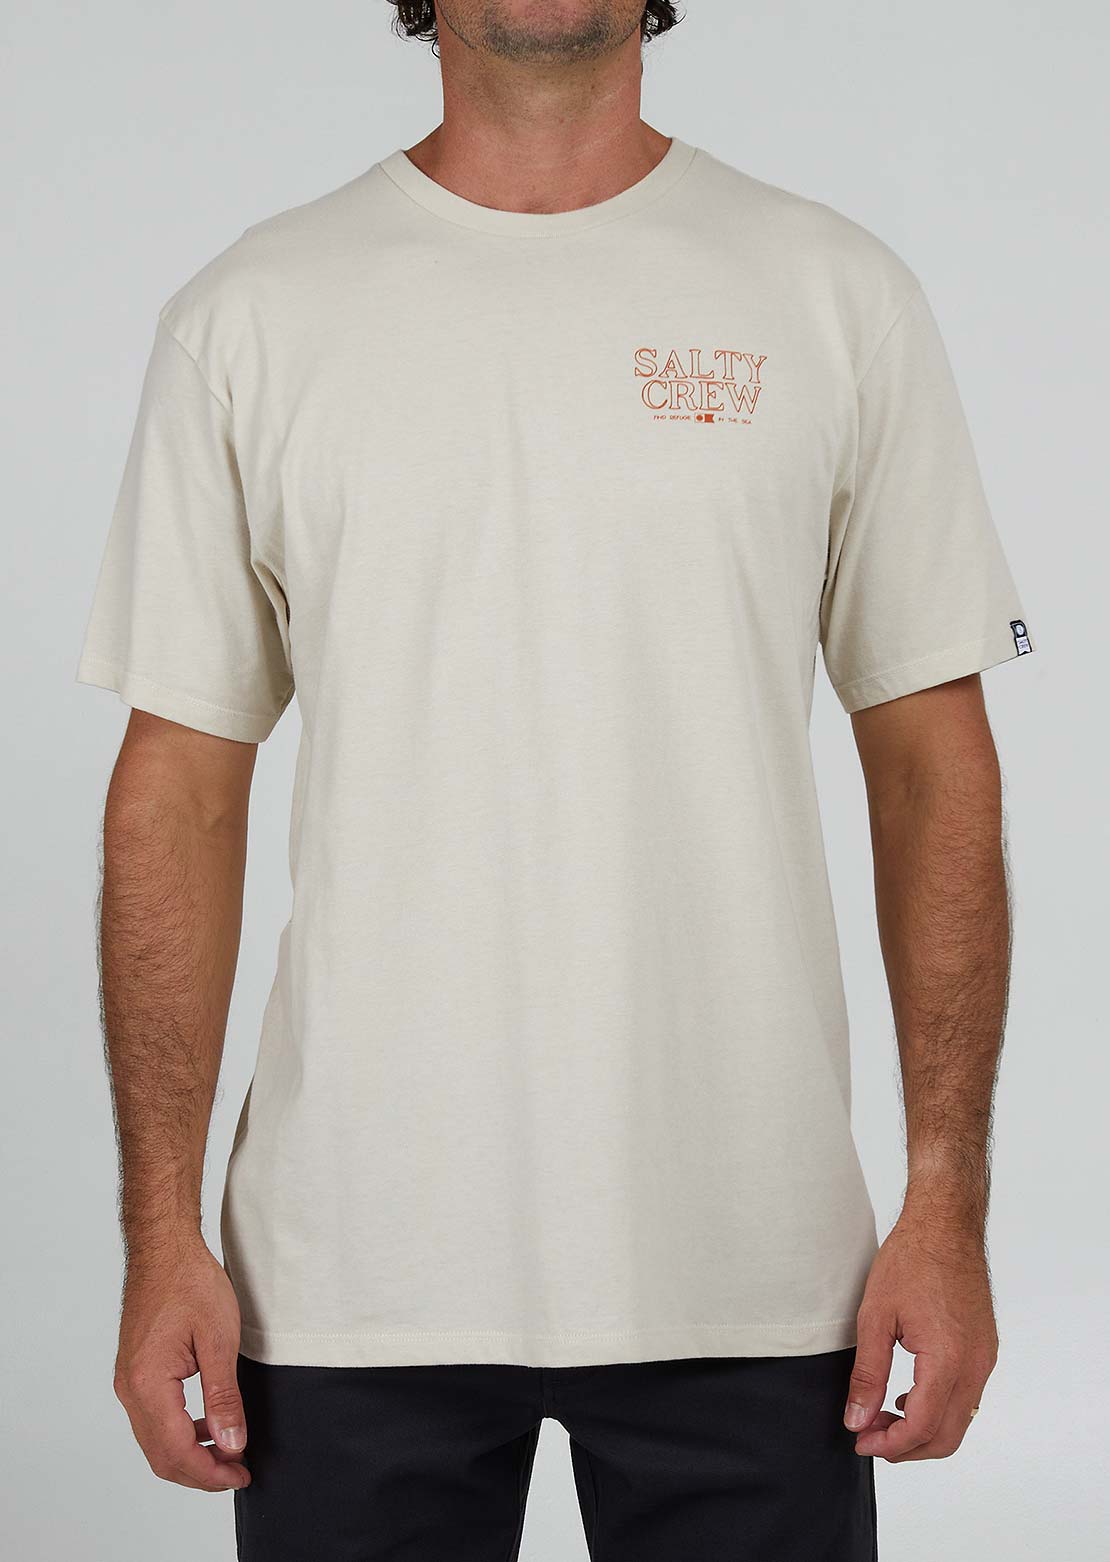 Salty Crew 'Bruce' White T-Shirt